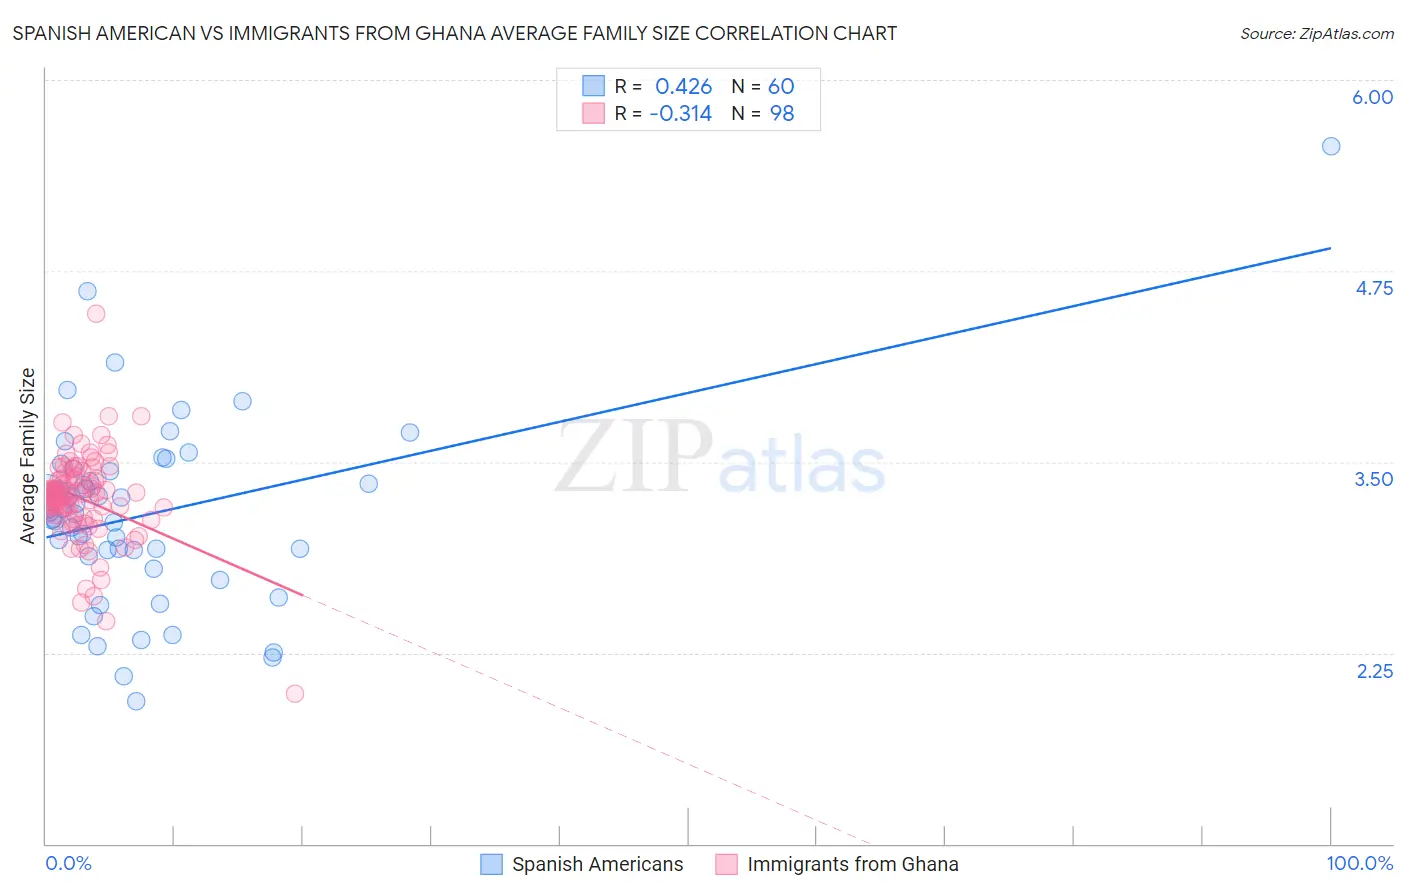 Spanish American vs Immigrants from Ghana Average Family Size